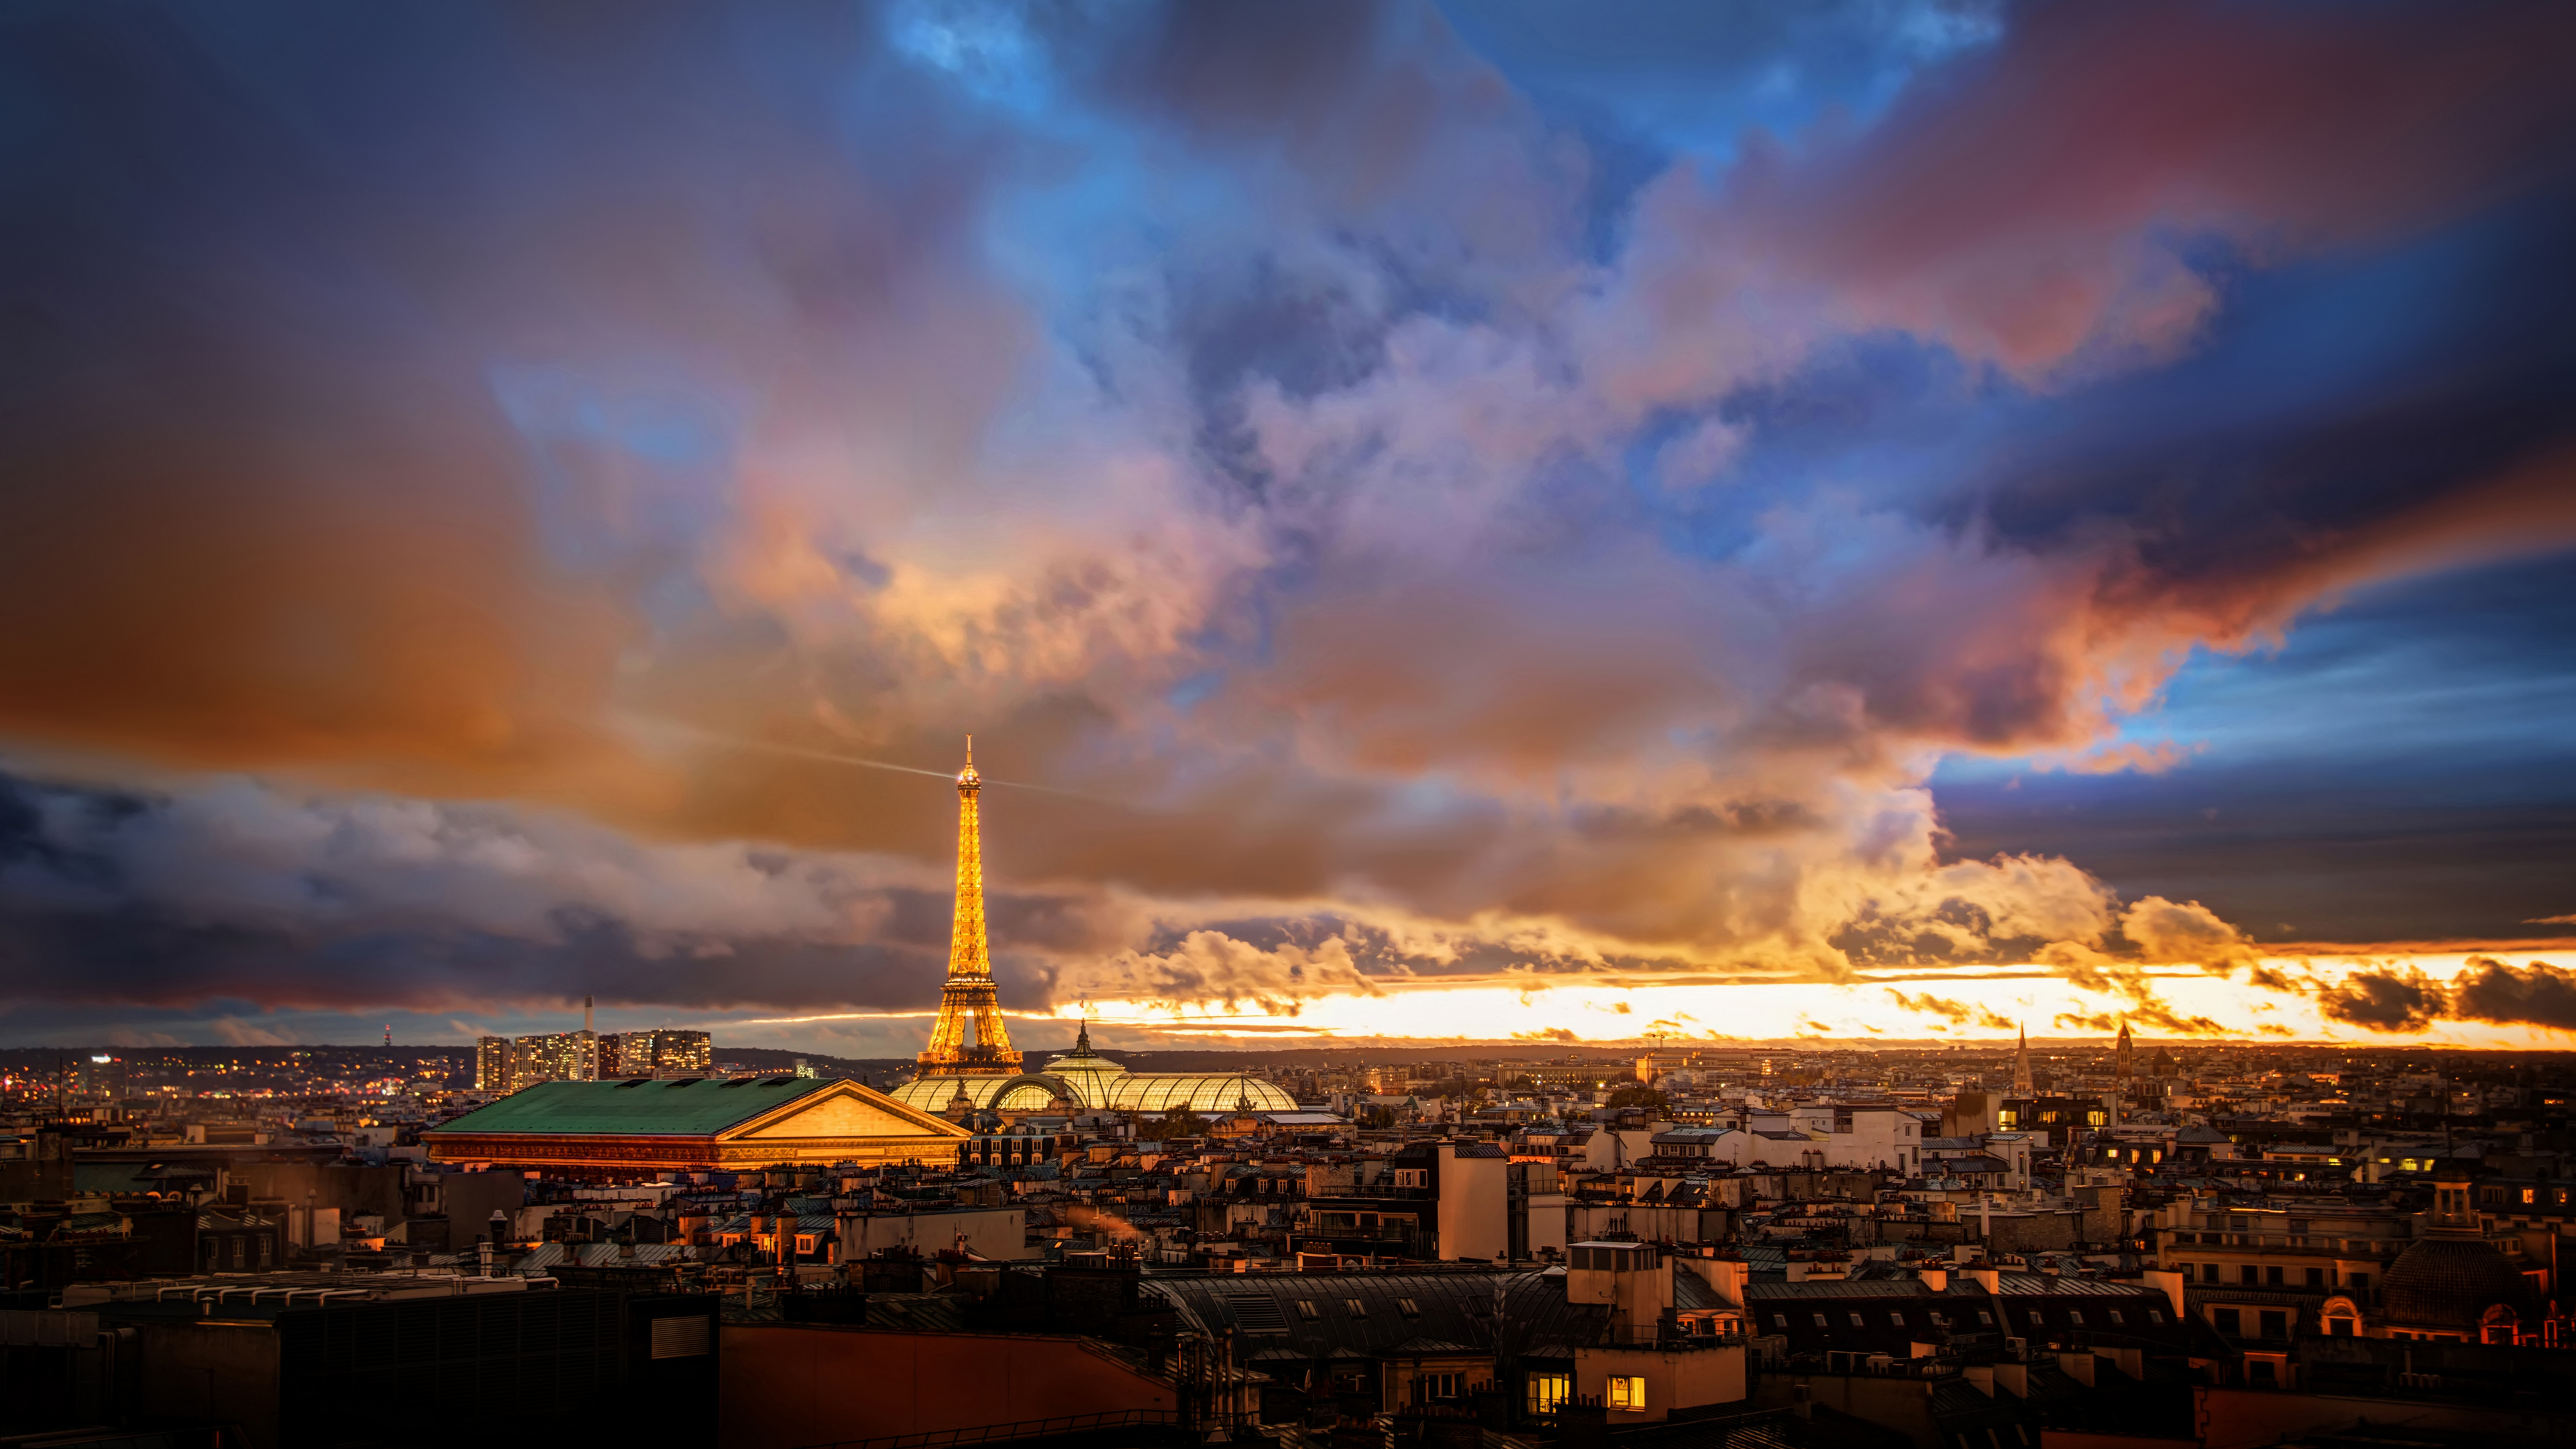 General 3840x2160 Trey Ratcliff photography cityscape France Paris Eiffel Tower building lights clouds storm sky sunset glow